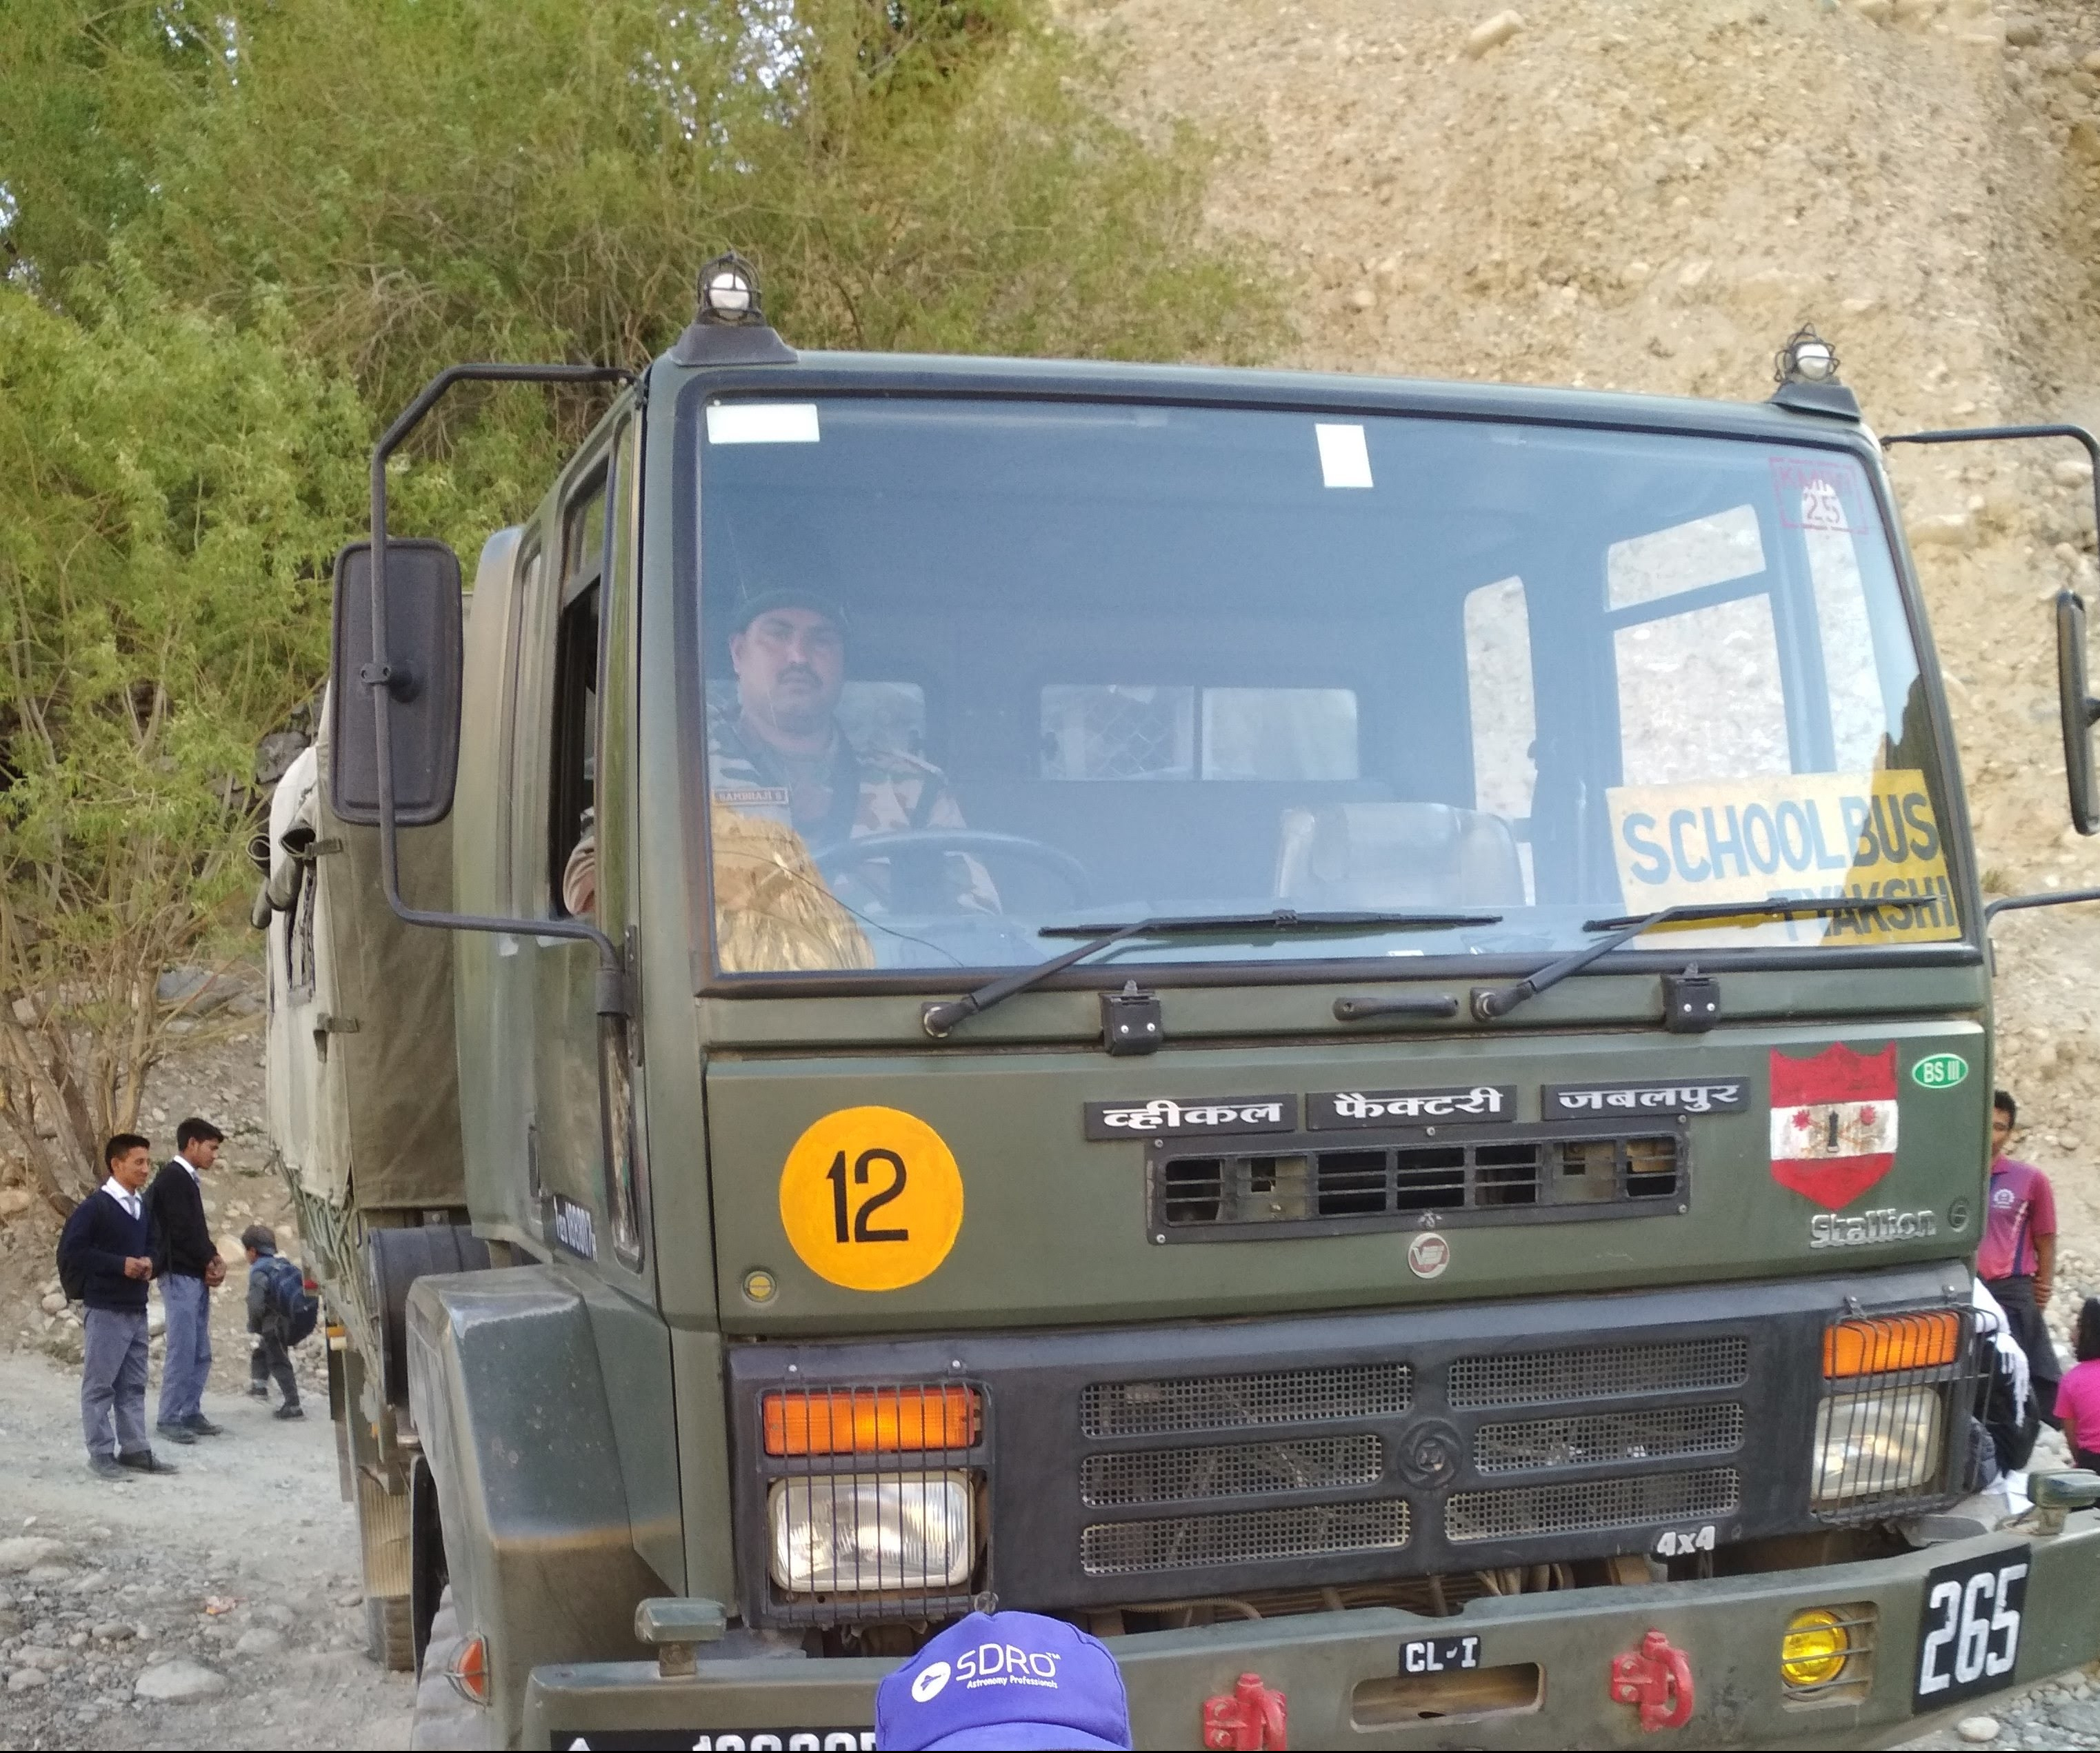 army-trucks-for-school-e1550926562764.jpg